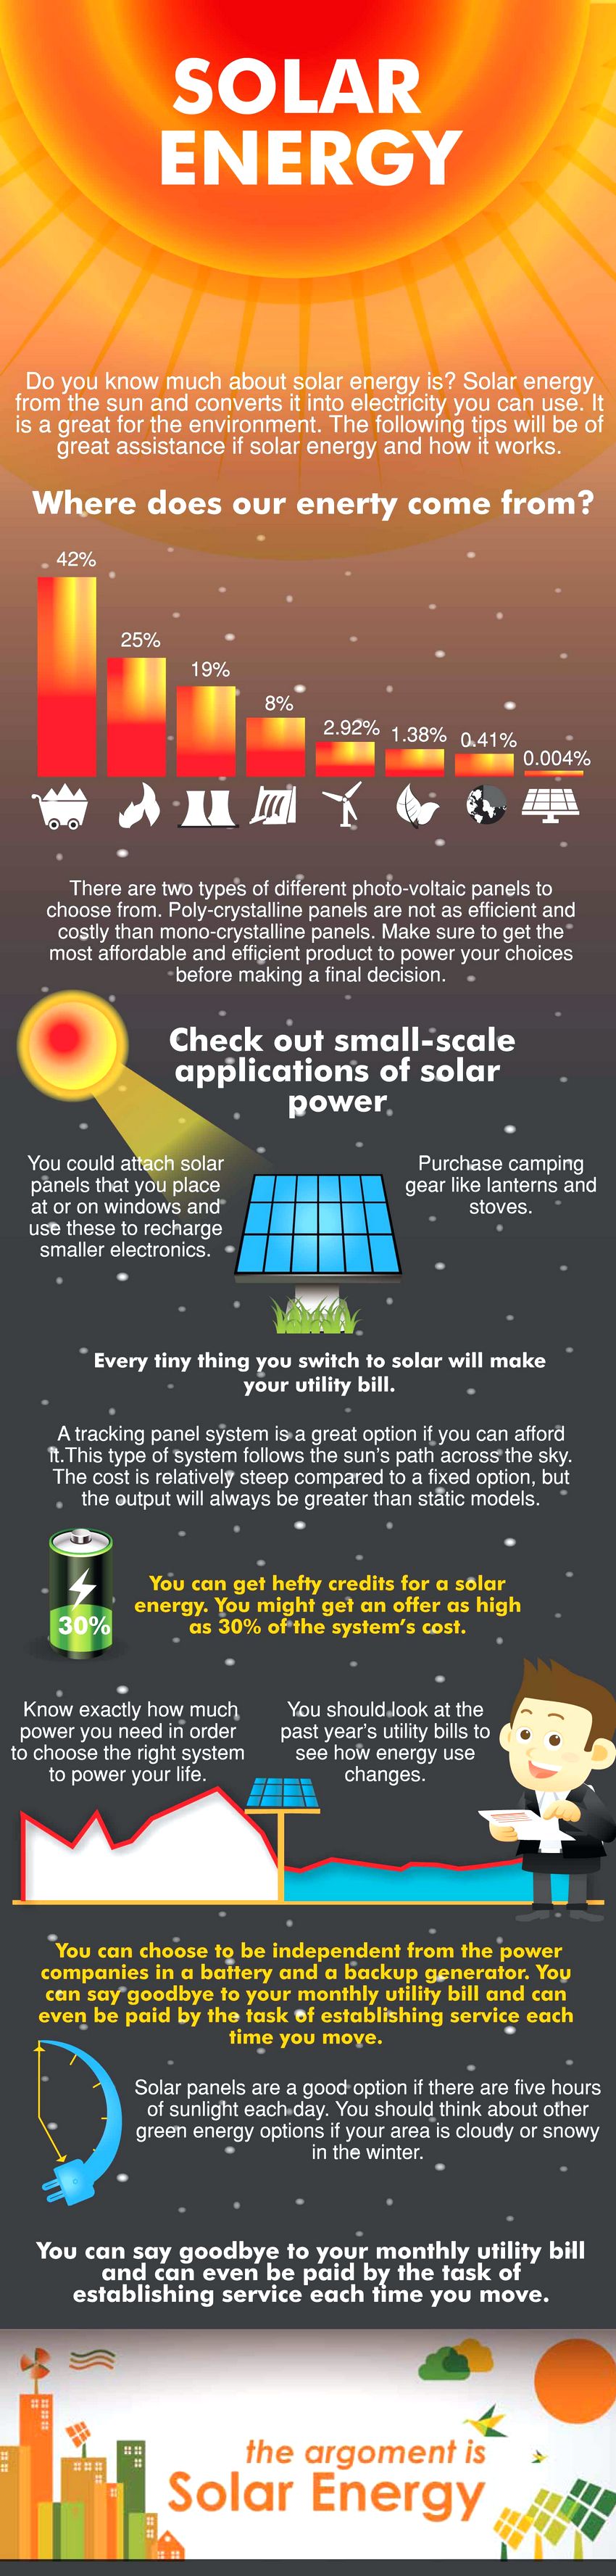 solar energy infographic journal